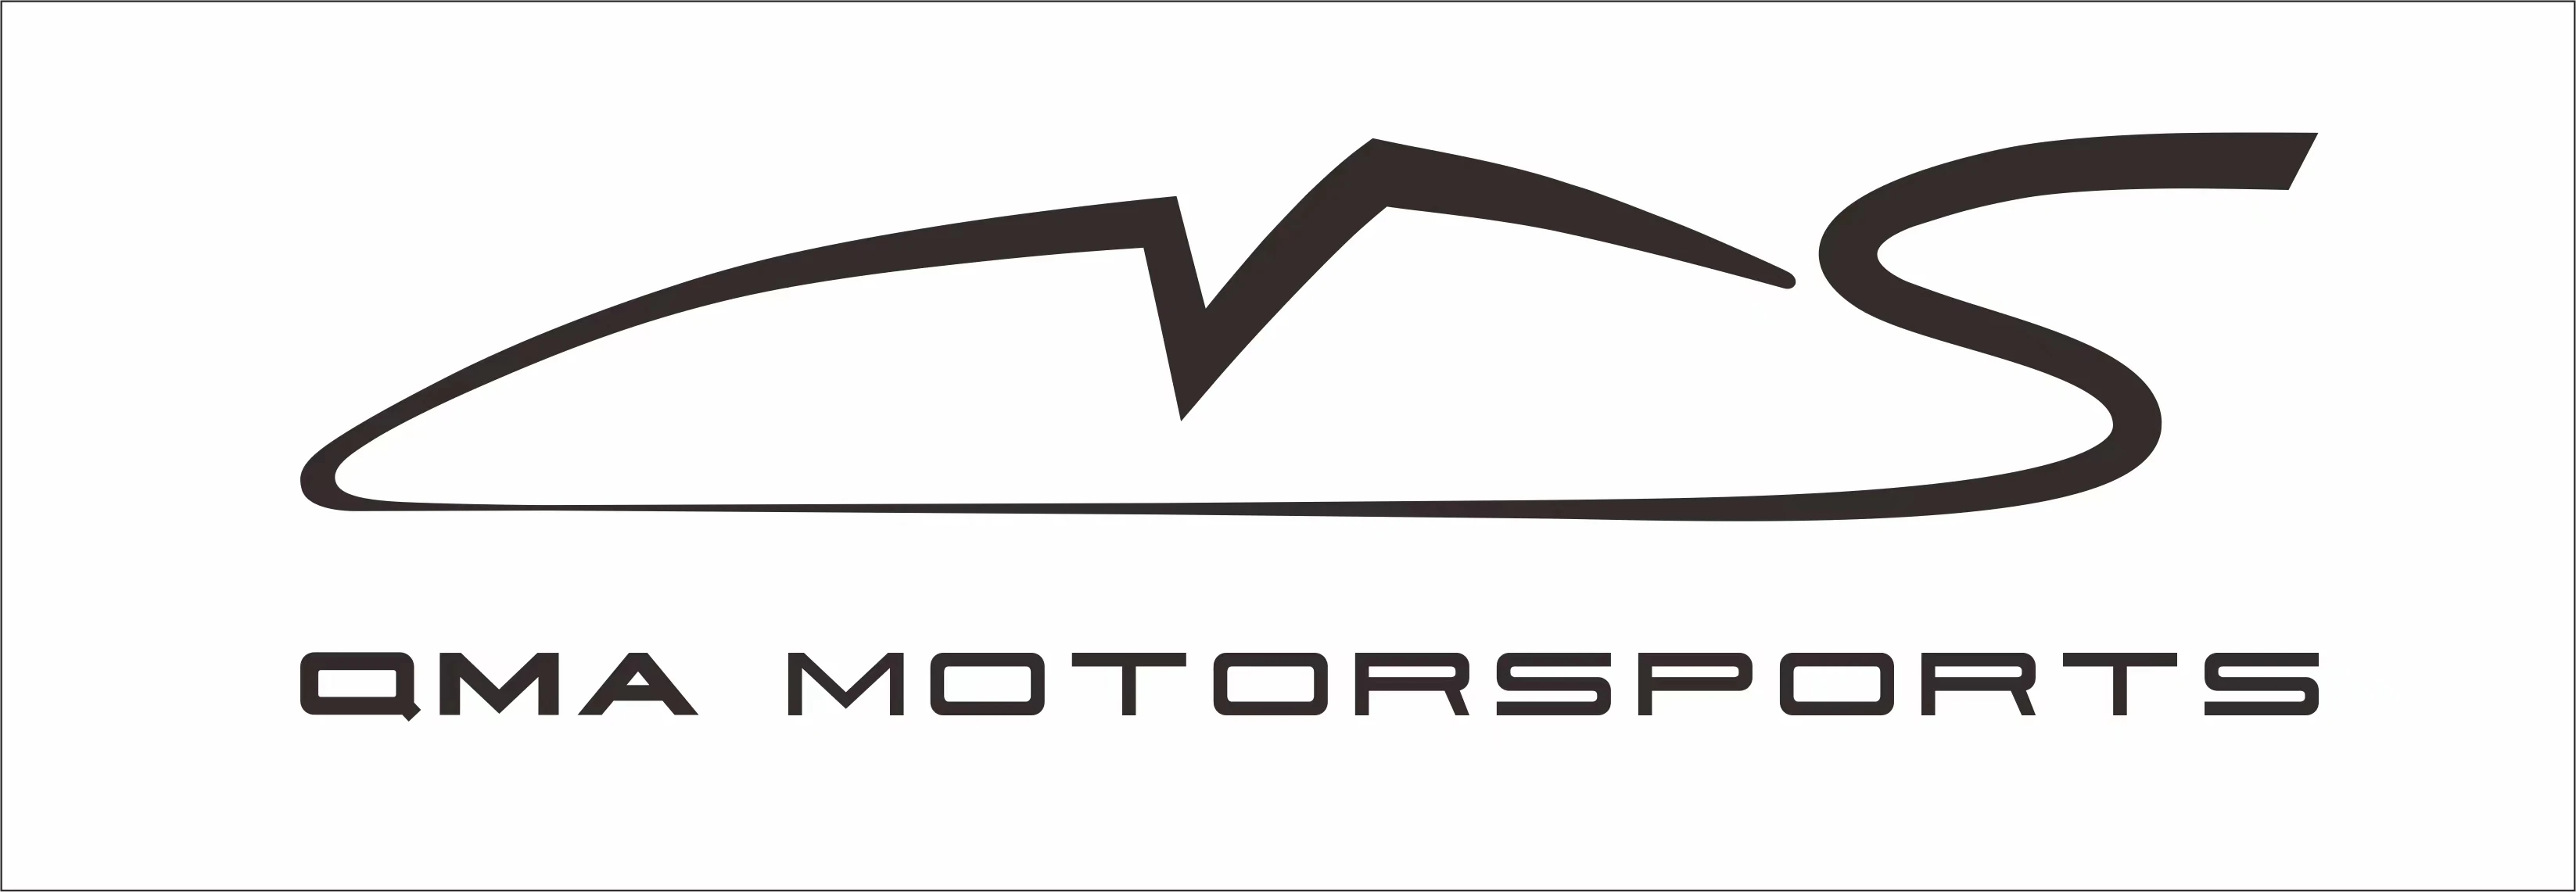 QMA Motorsports